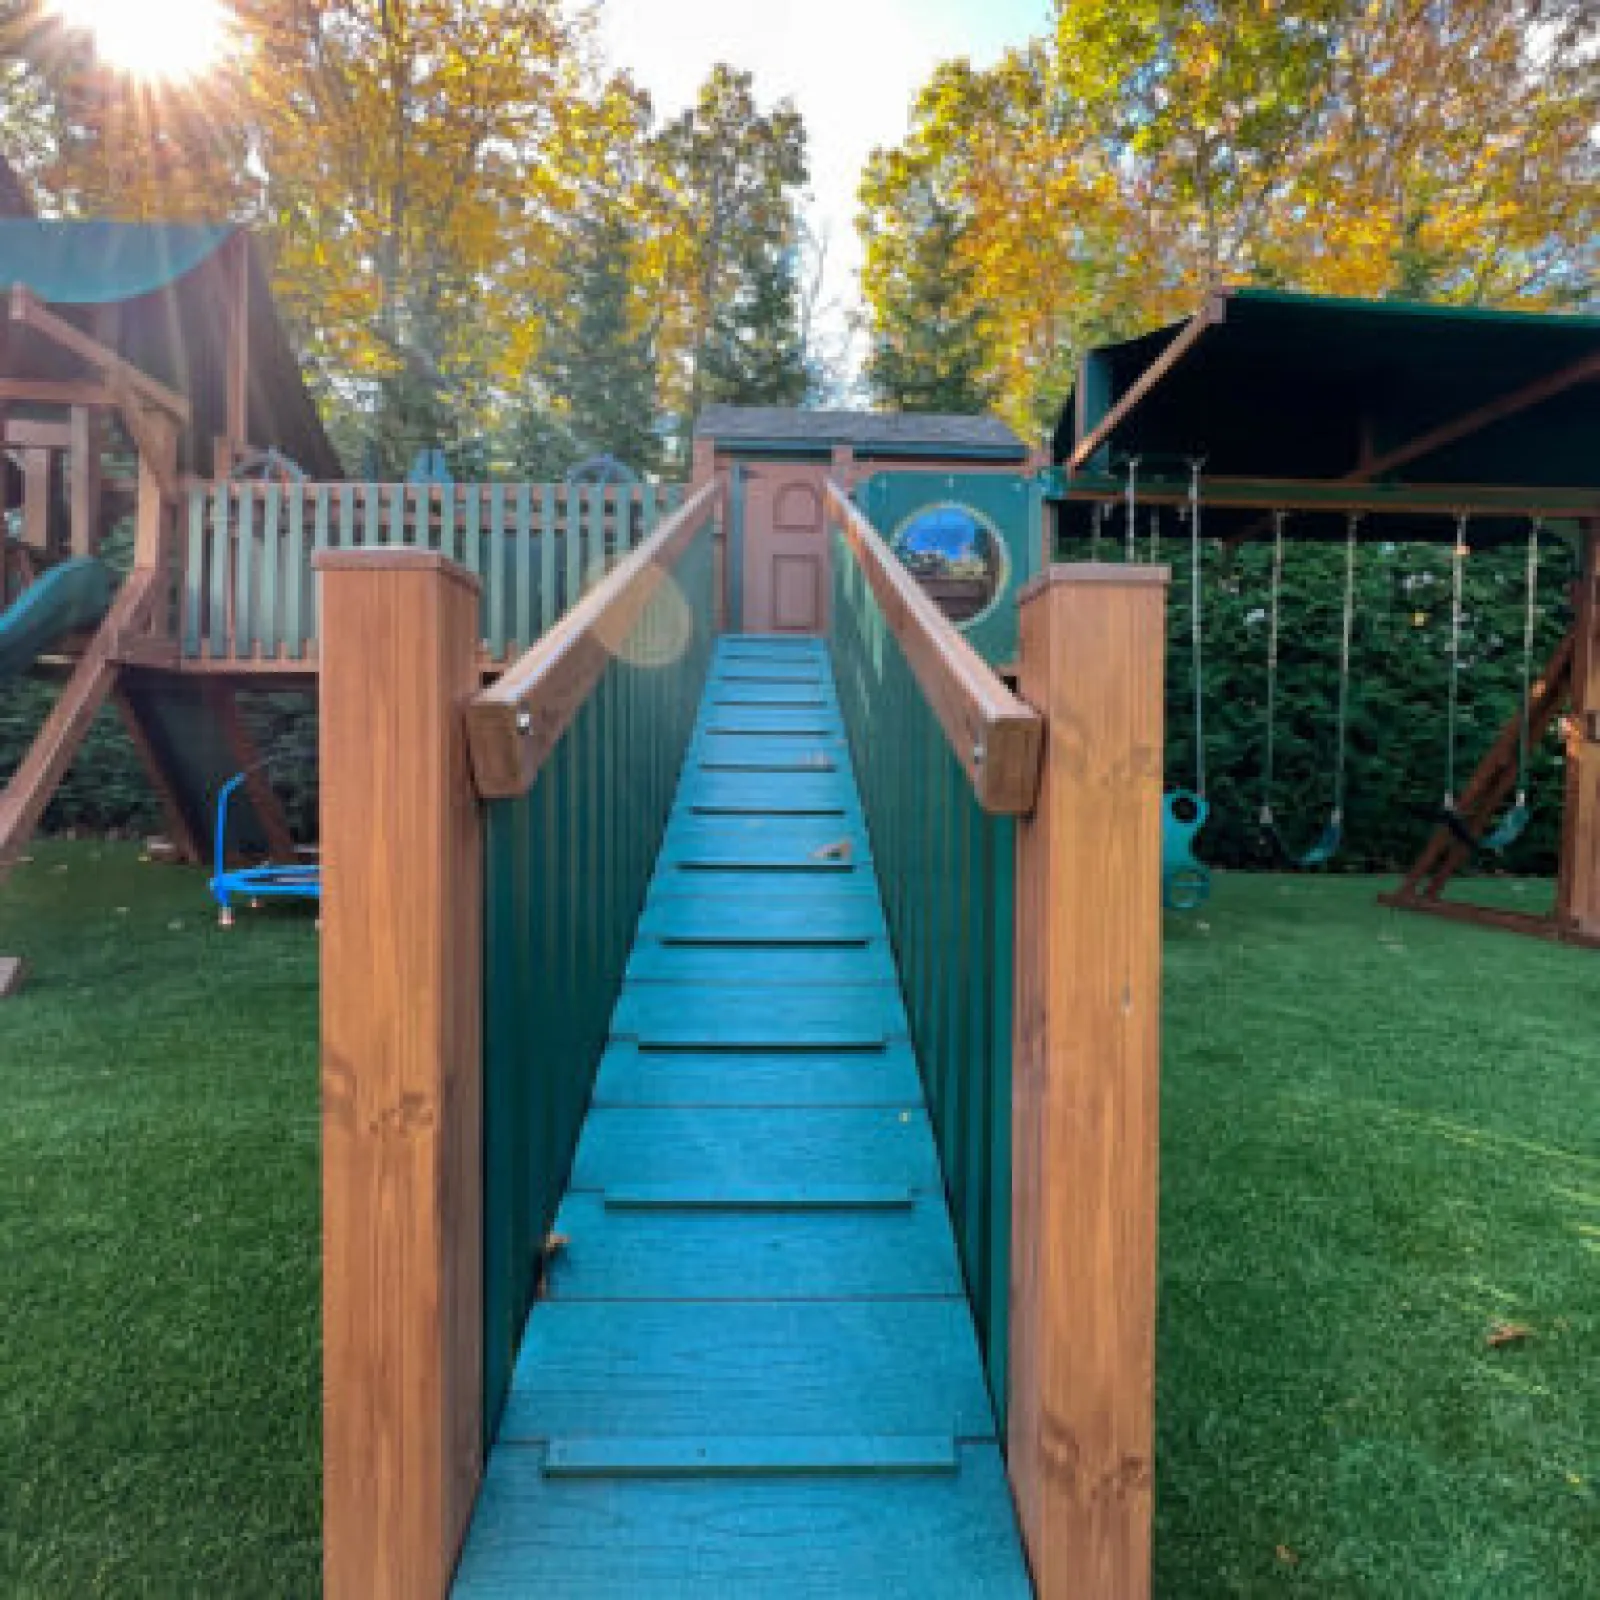 a wooden slide in a yard